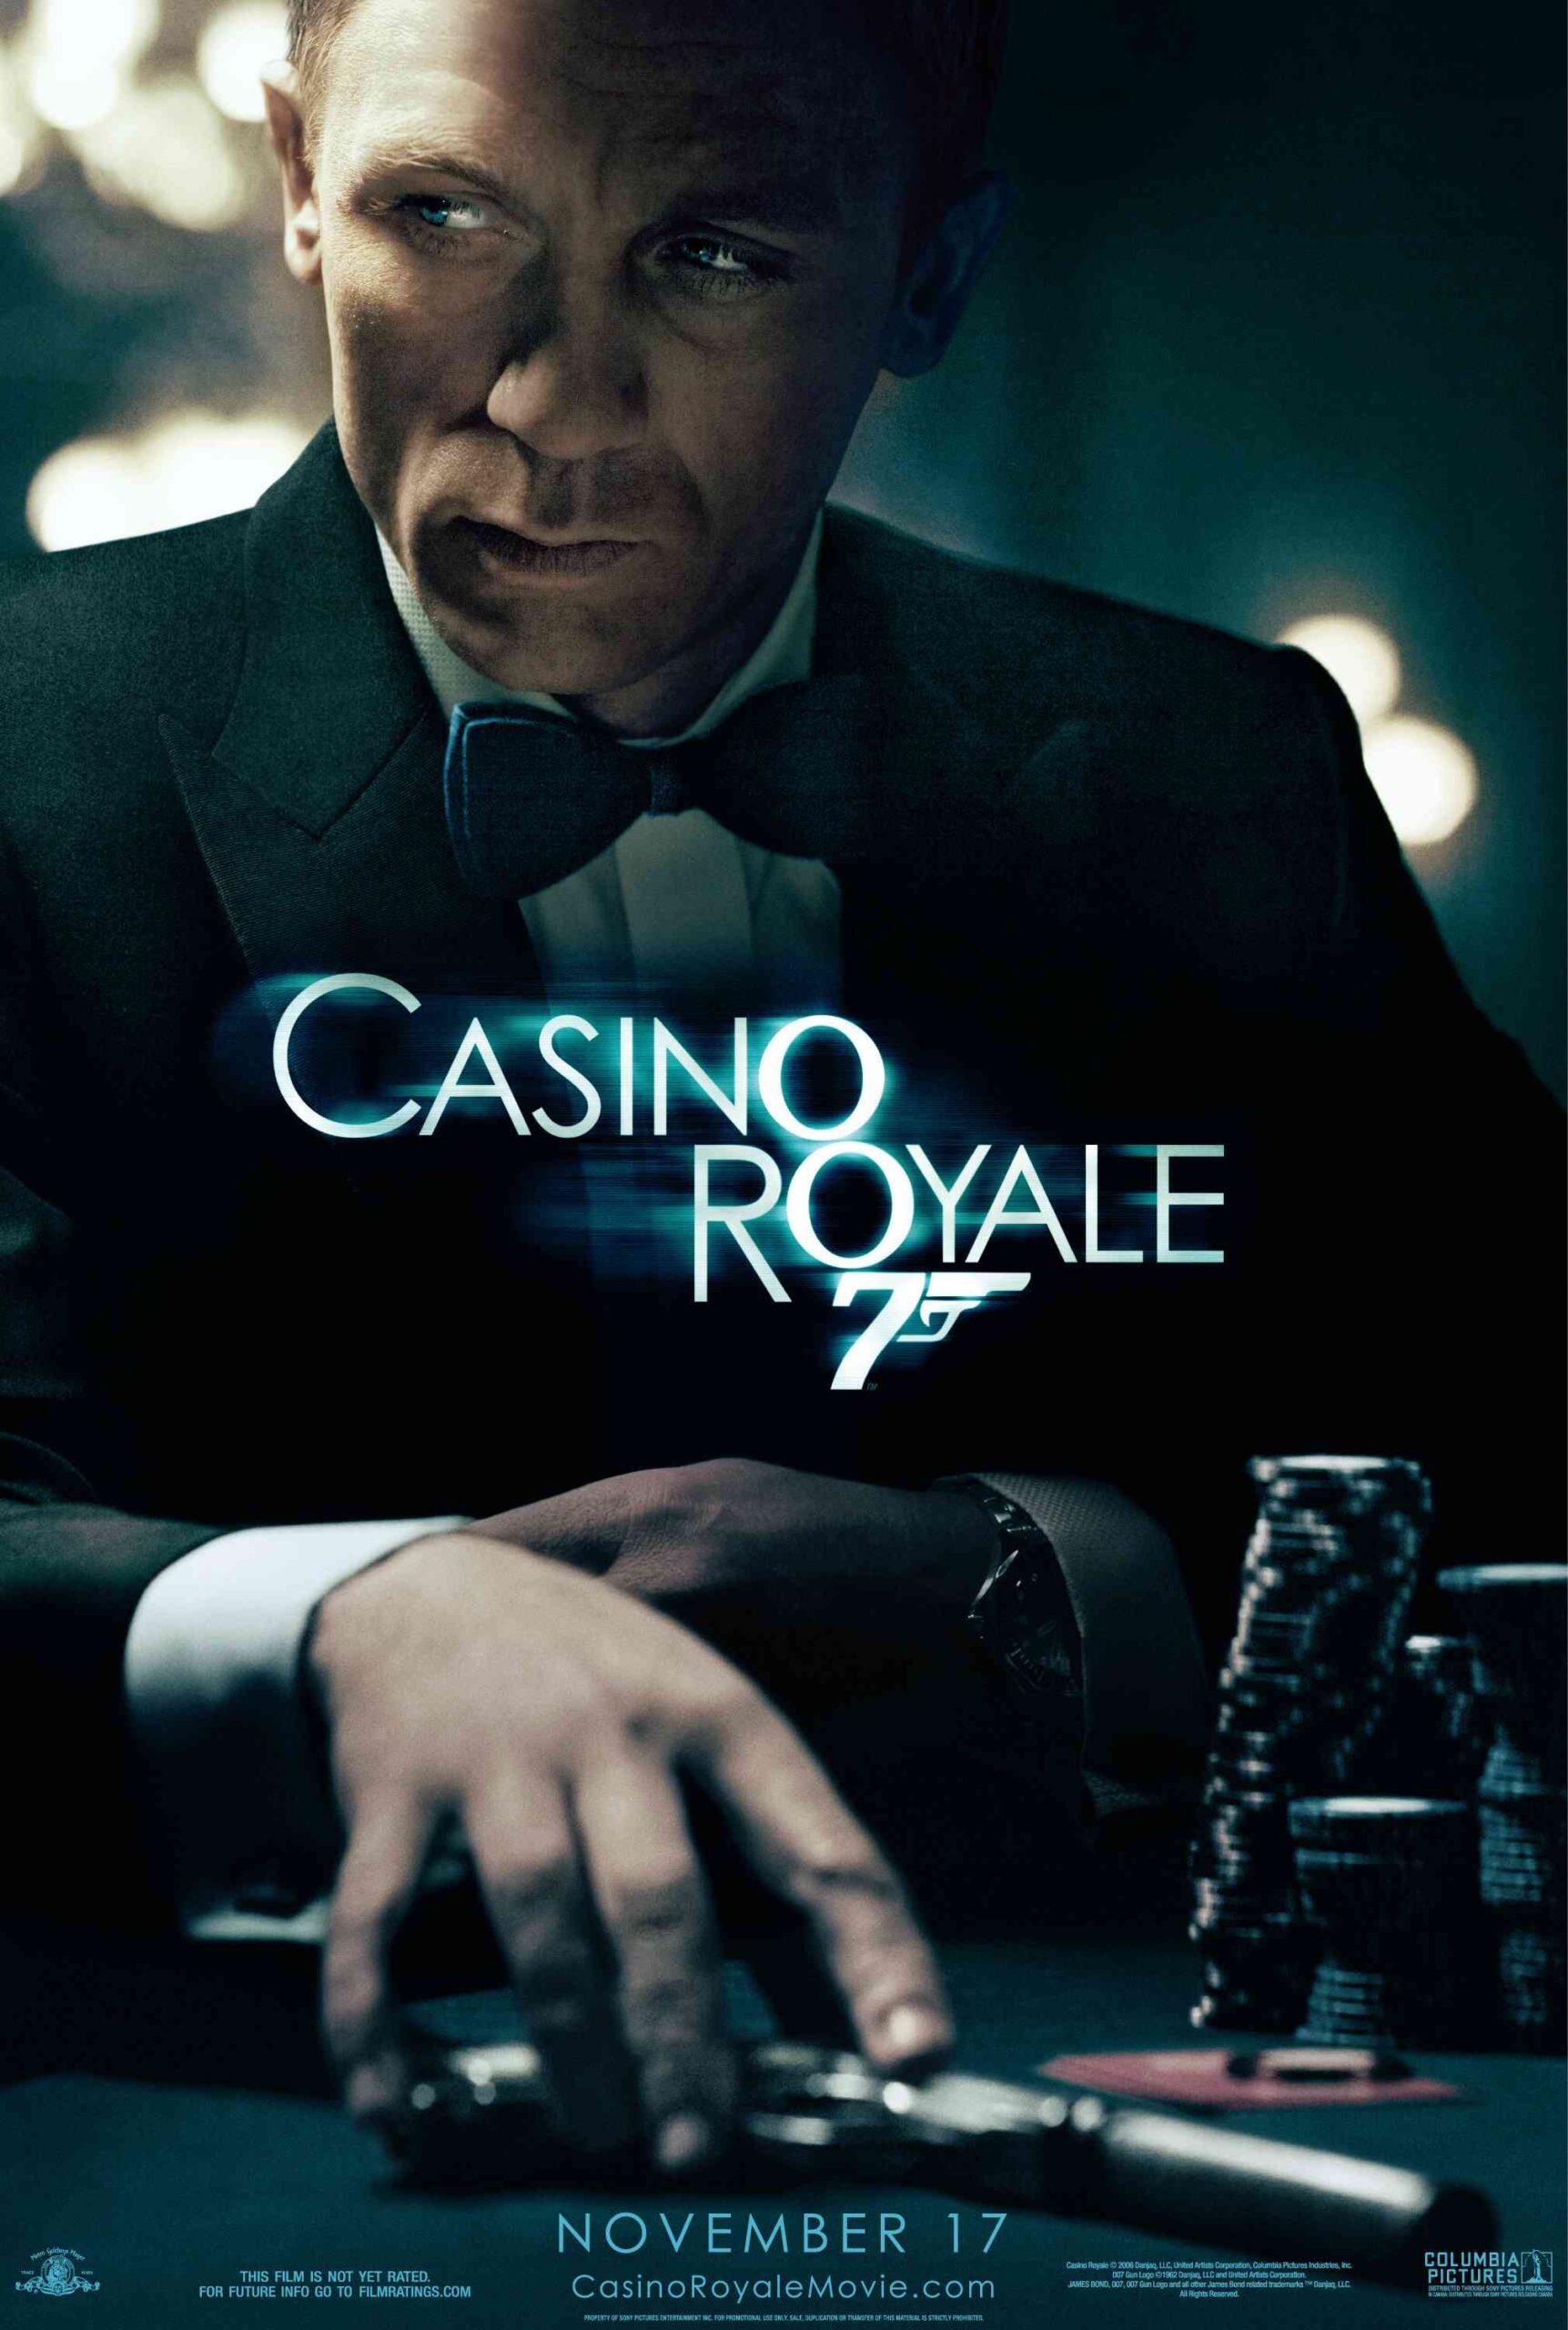 FULL MOVIE: Casino Royale (2006) [Action]